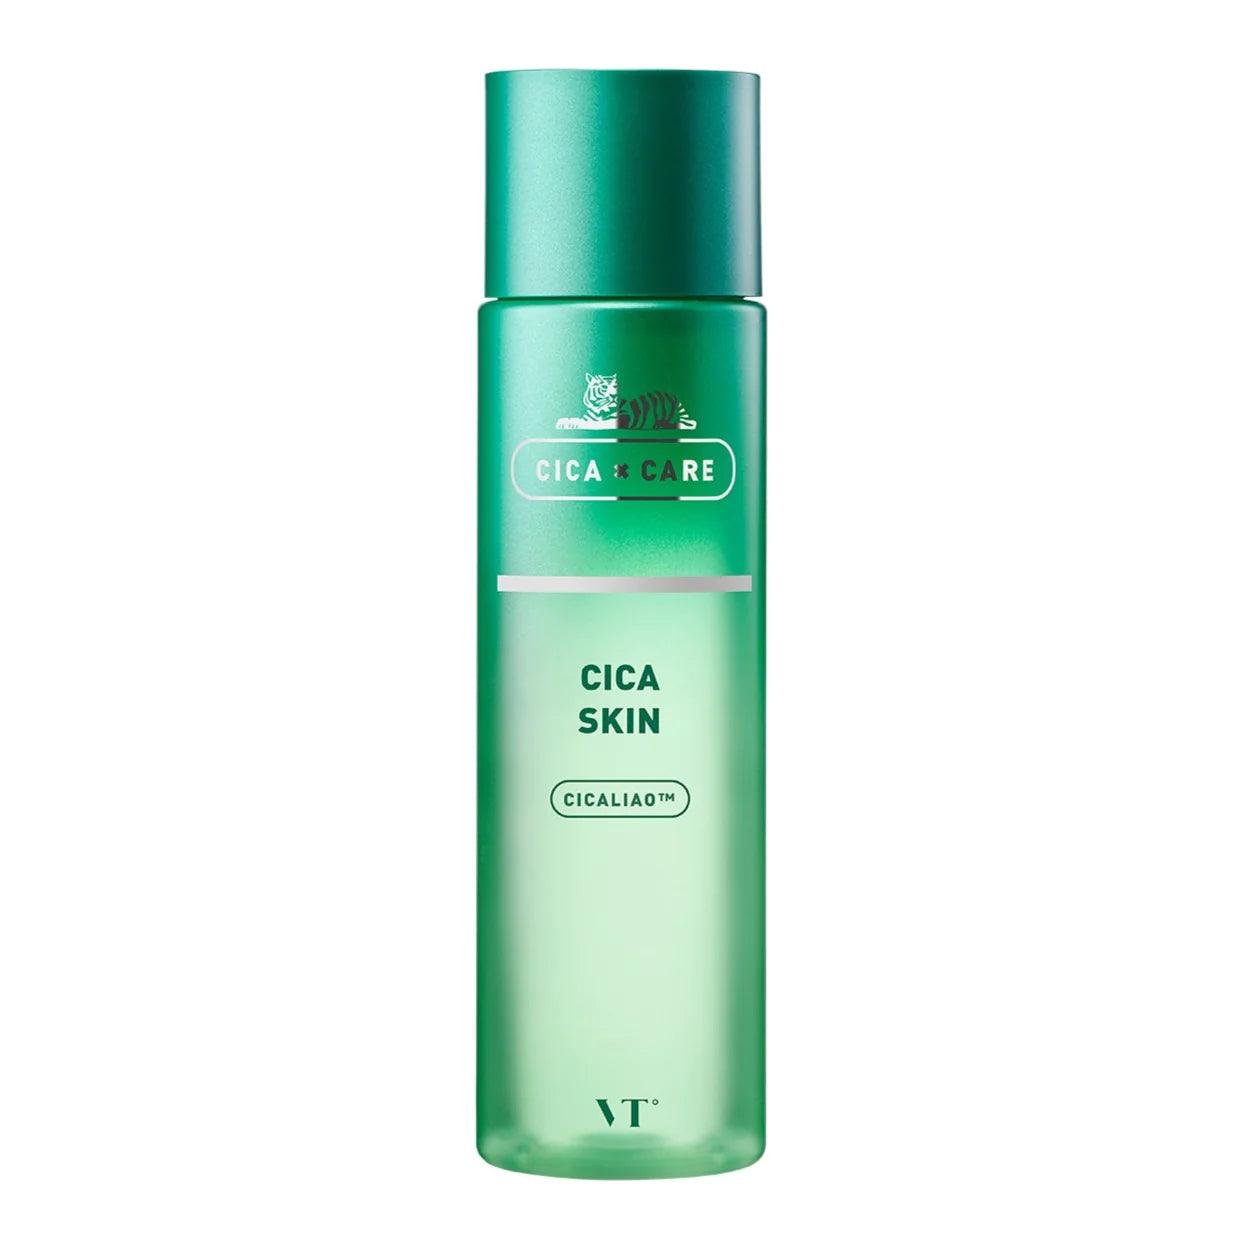 VT Cica Skin - 200 ml - K-Beauty Arabia